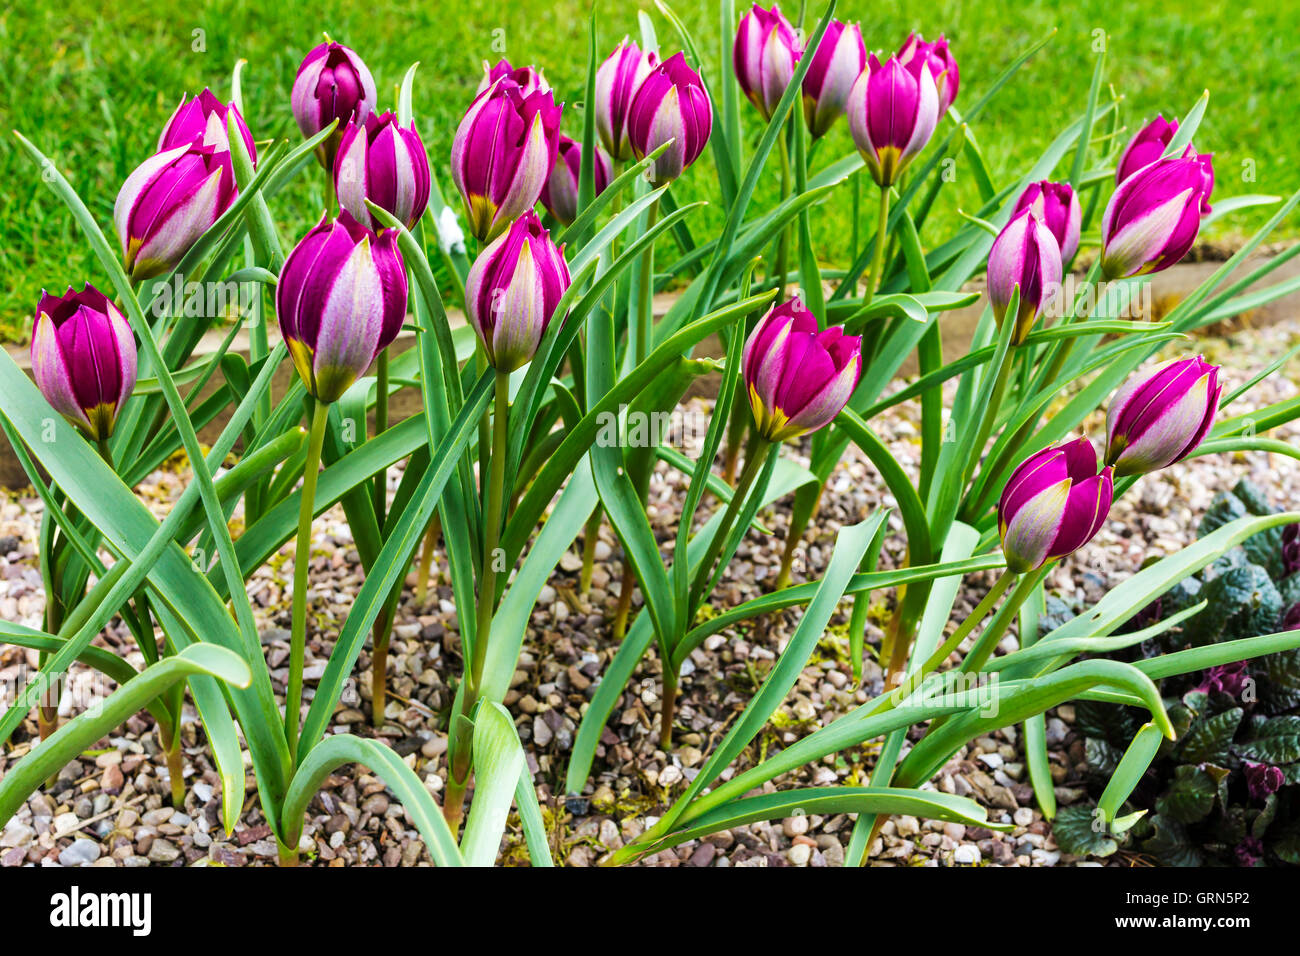 Nana viola i tulipani Tulipa Humilus' Odalisca in un giardino. Foto Stock